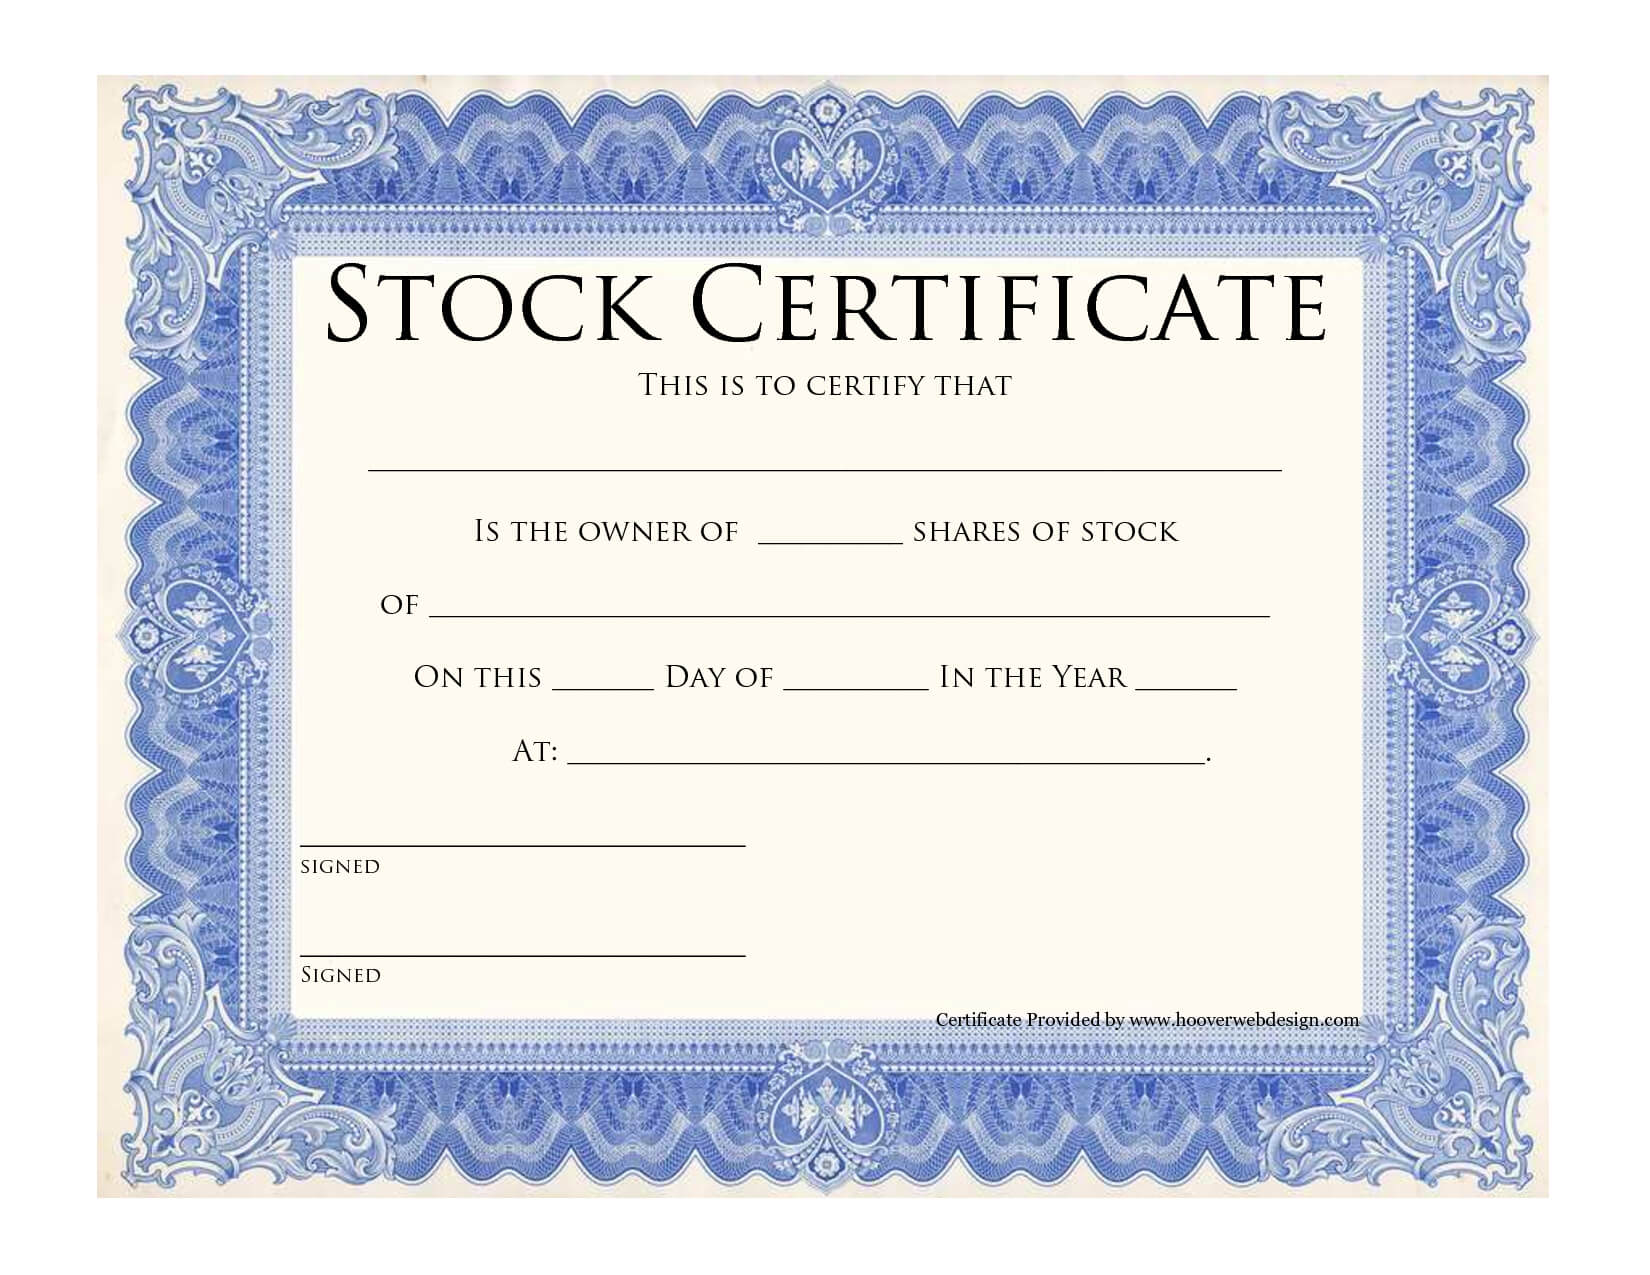 Blank Stock Certificate Template | Printable Stock For Corporate Share Certificate Template